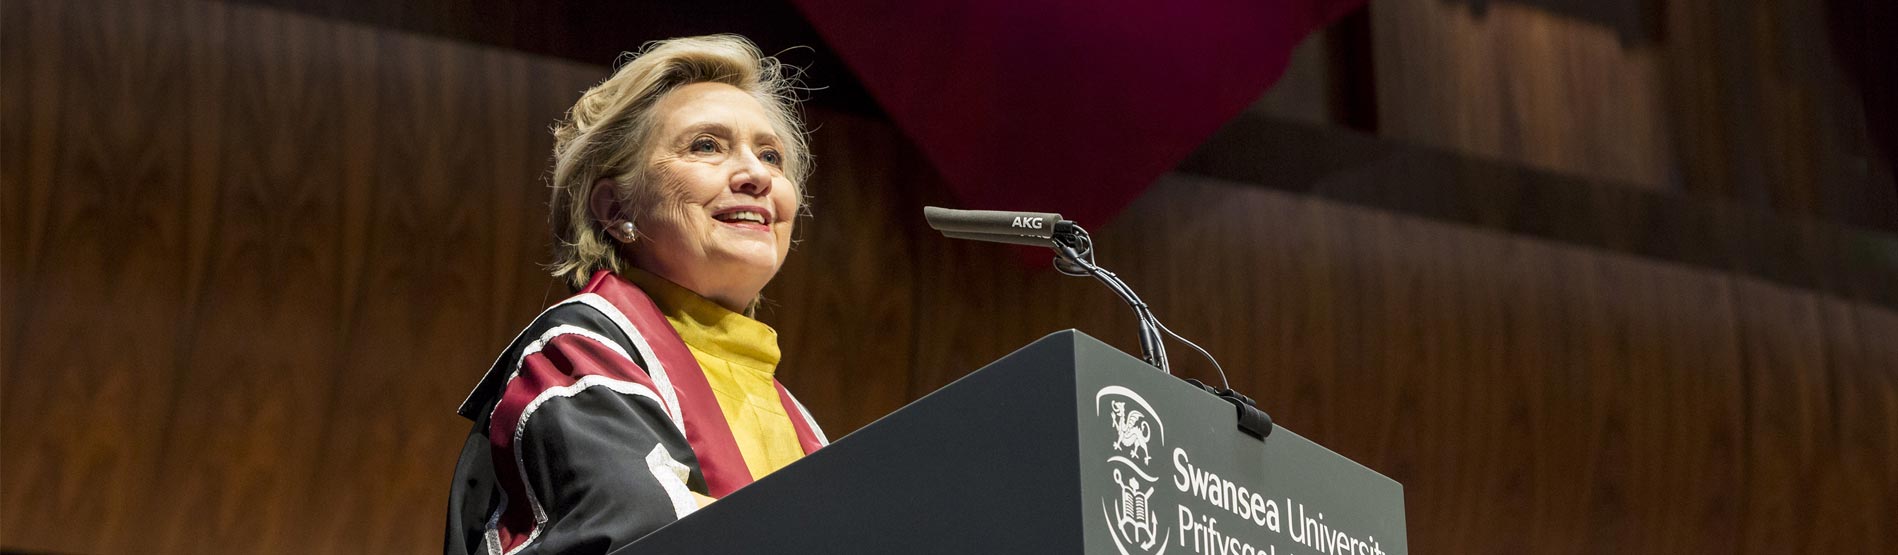 Hillary Clinton giving a speech at Swansea University